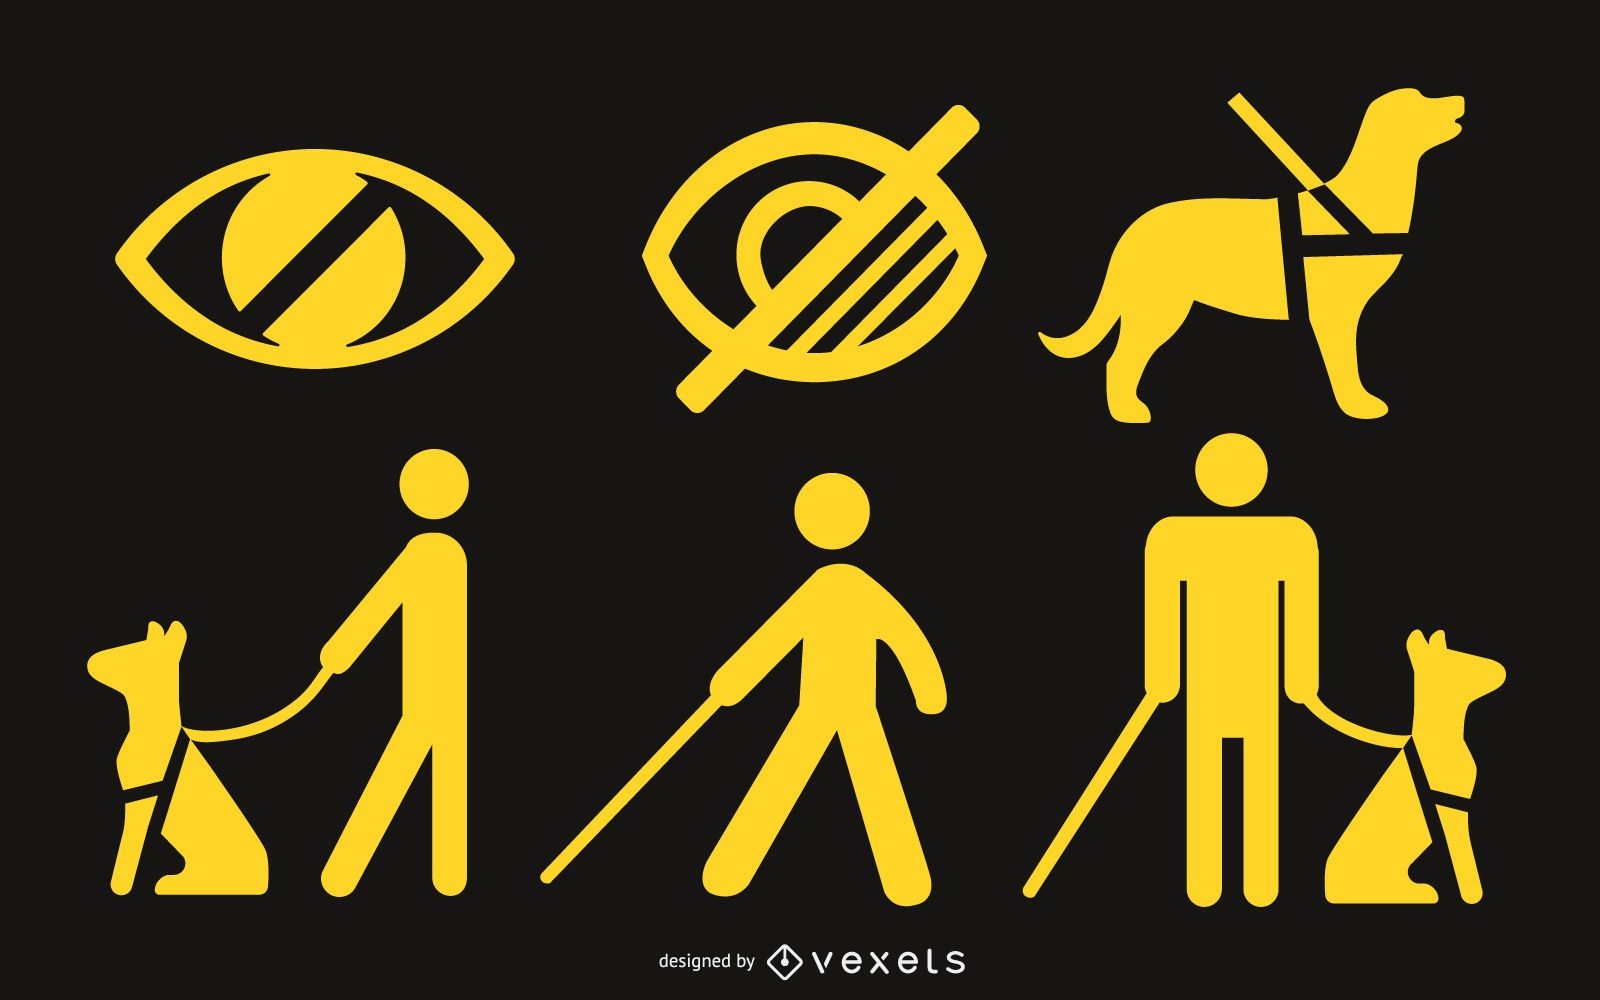 Blind symbols silhouette set